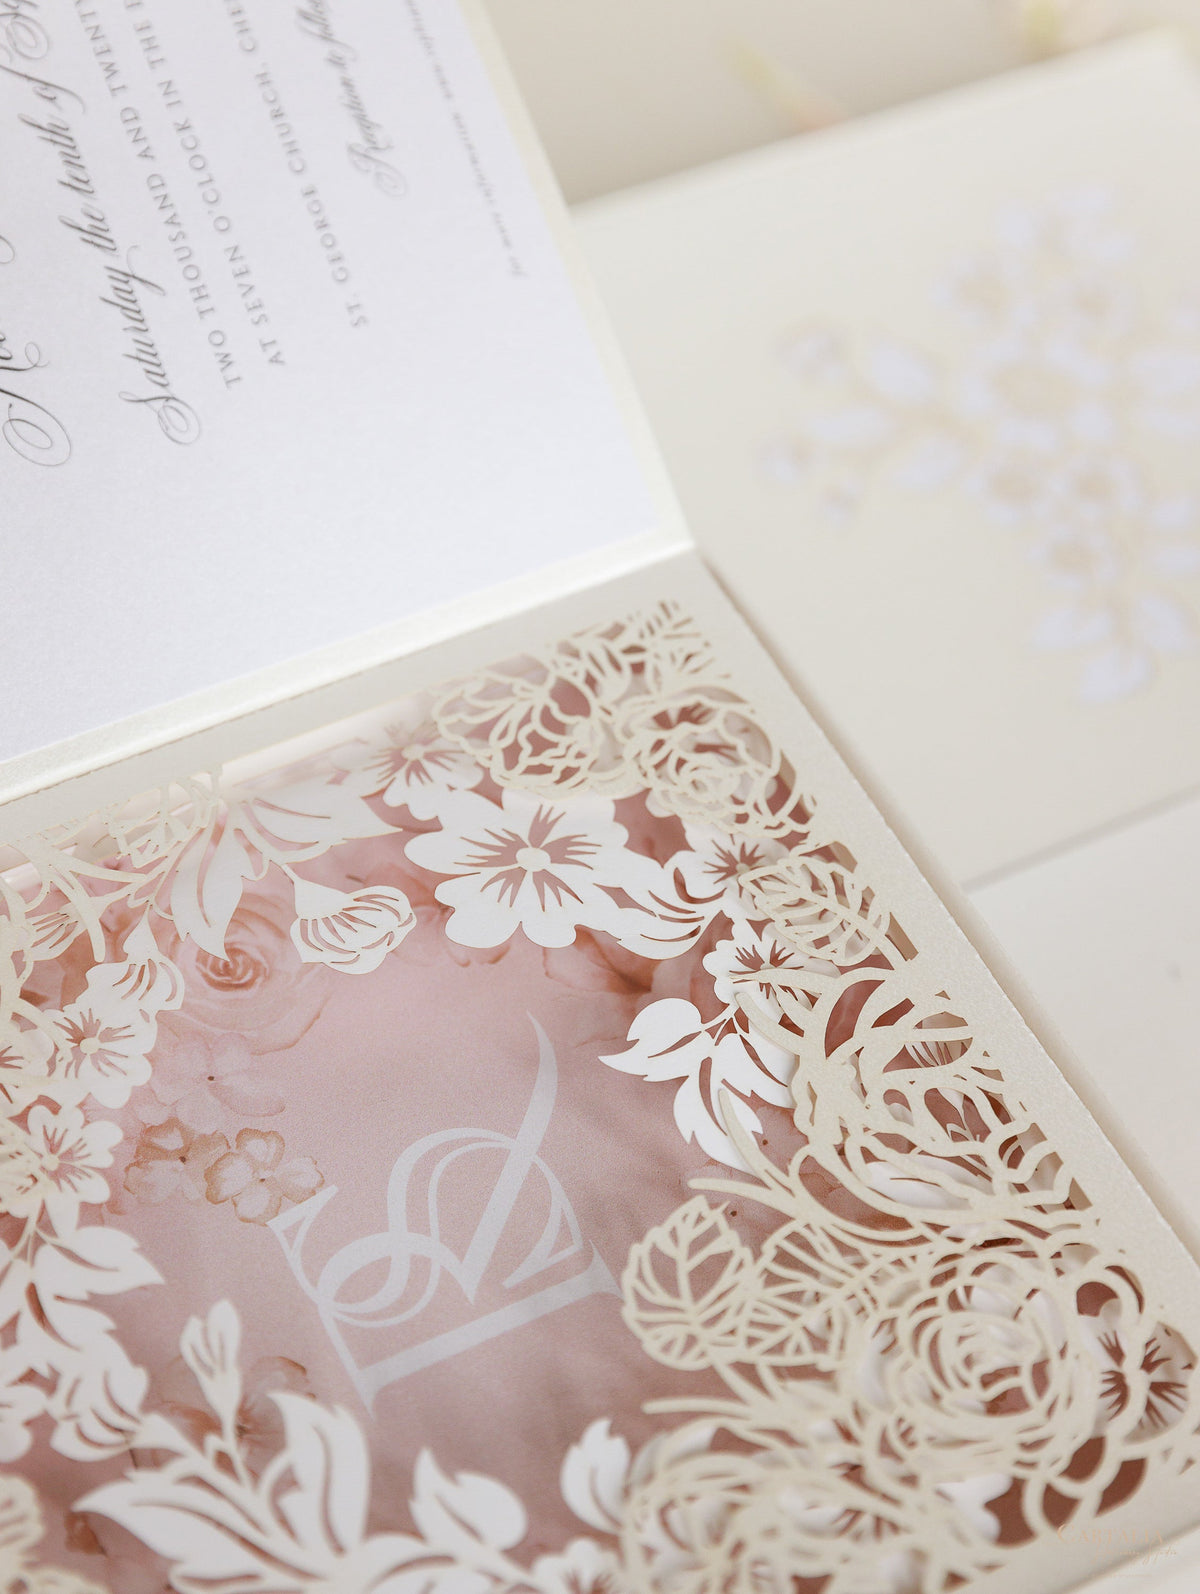 Couture Box: Suite de invitación de boda con corte láser en niveles lujosamente intrincados en 3D